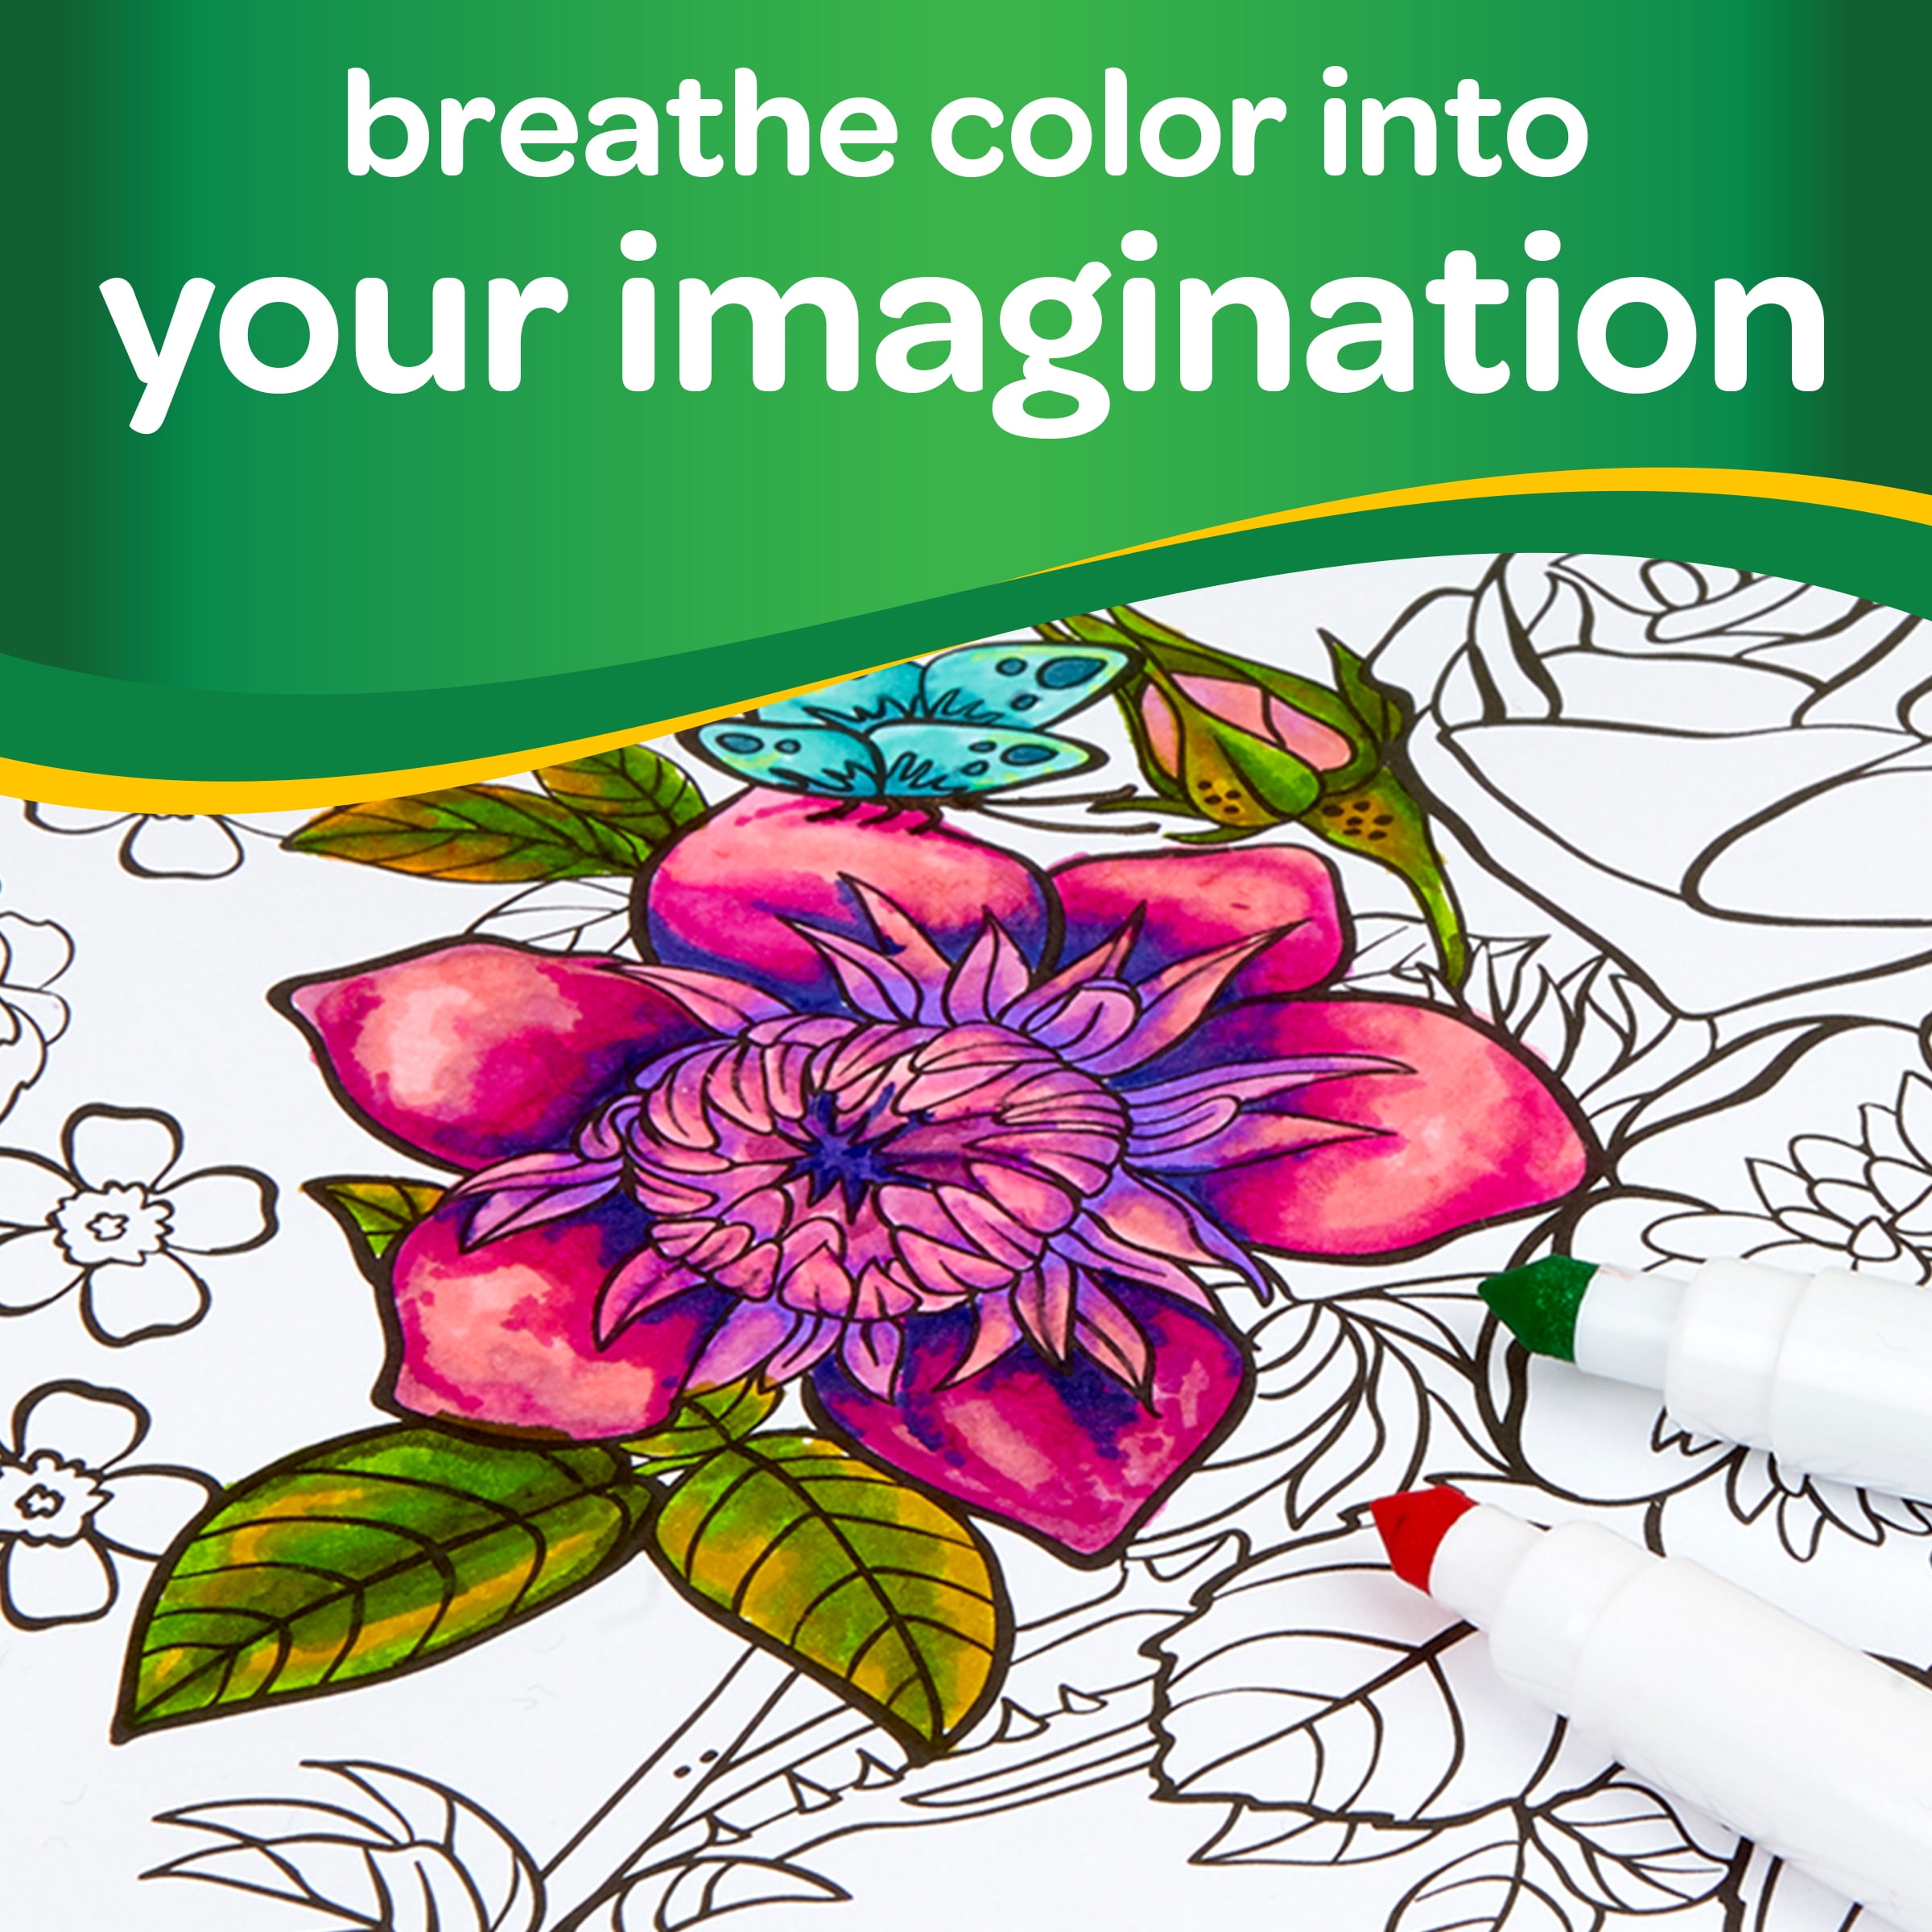 Crayola Super Tips Washable Marker Set - Assorted Colors, Fine Line, Set of  50, BLICK Art Materials